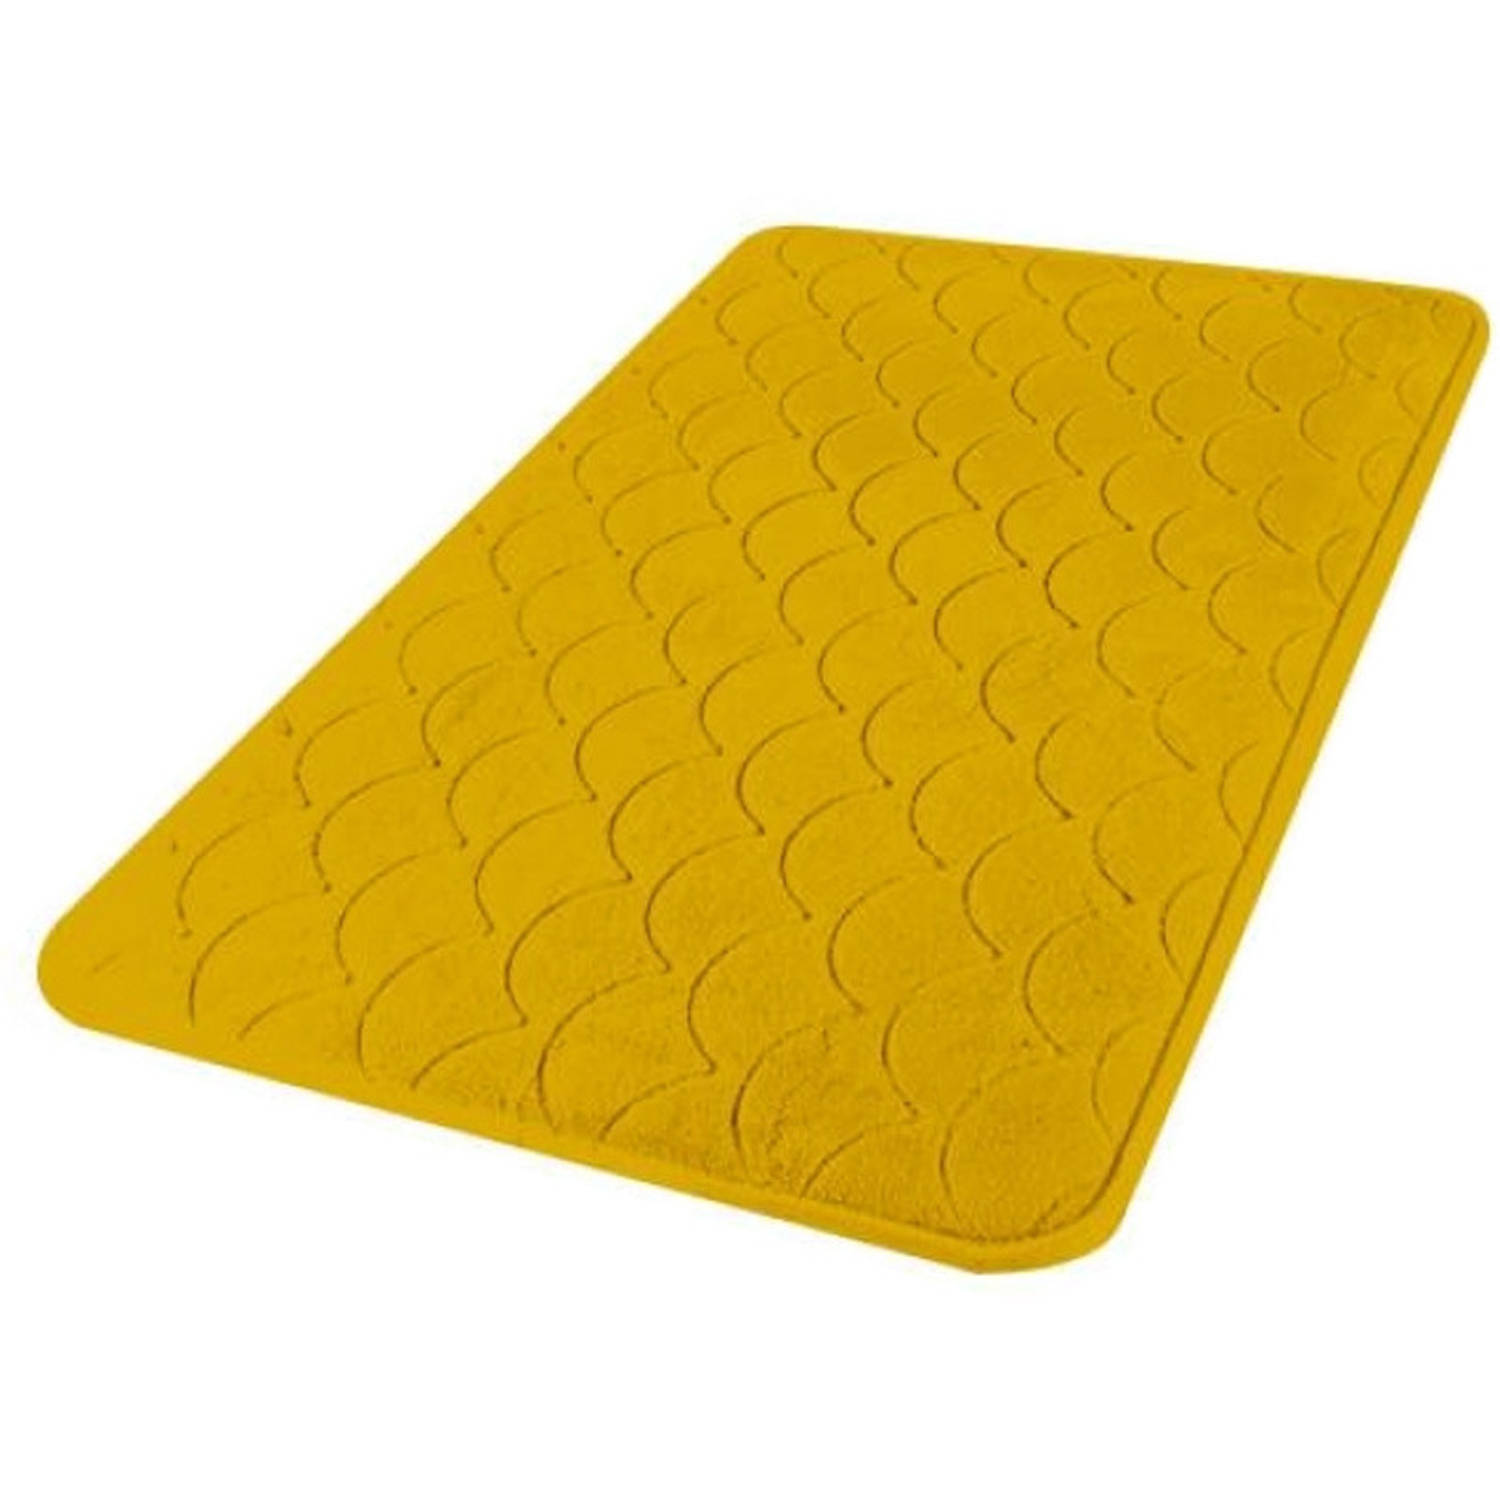 Urban Living Badkamerkleedje/badmat tapijt - memory foam - oker geel - 50 x 80 cm - anti slip